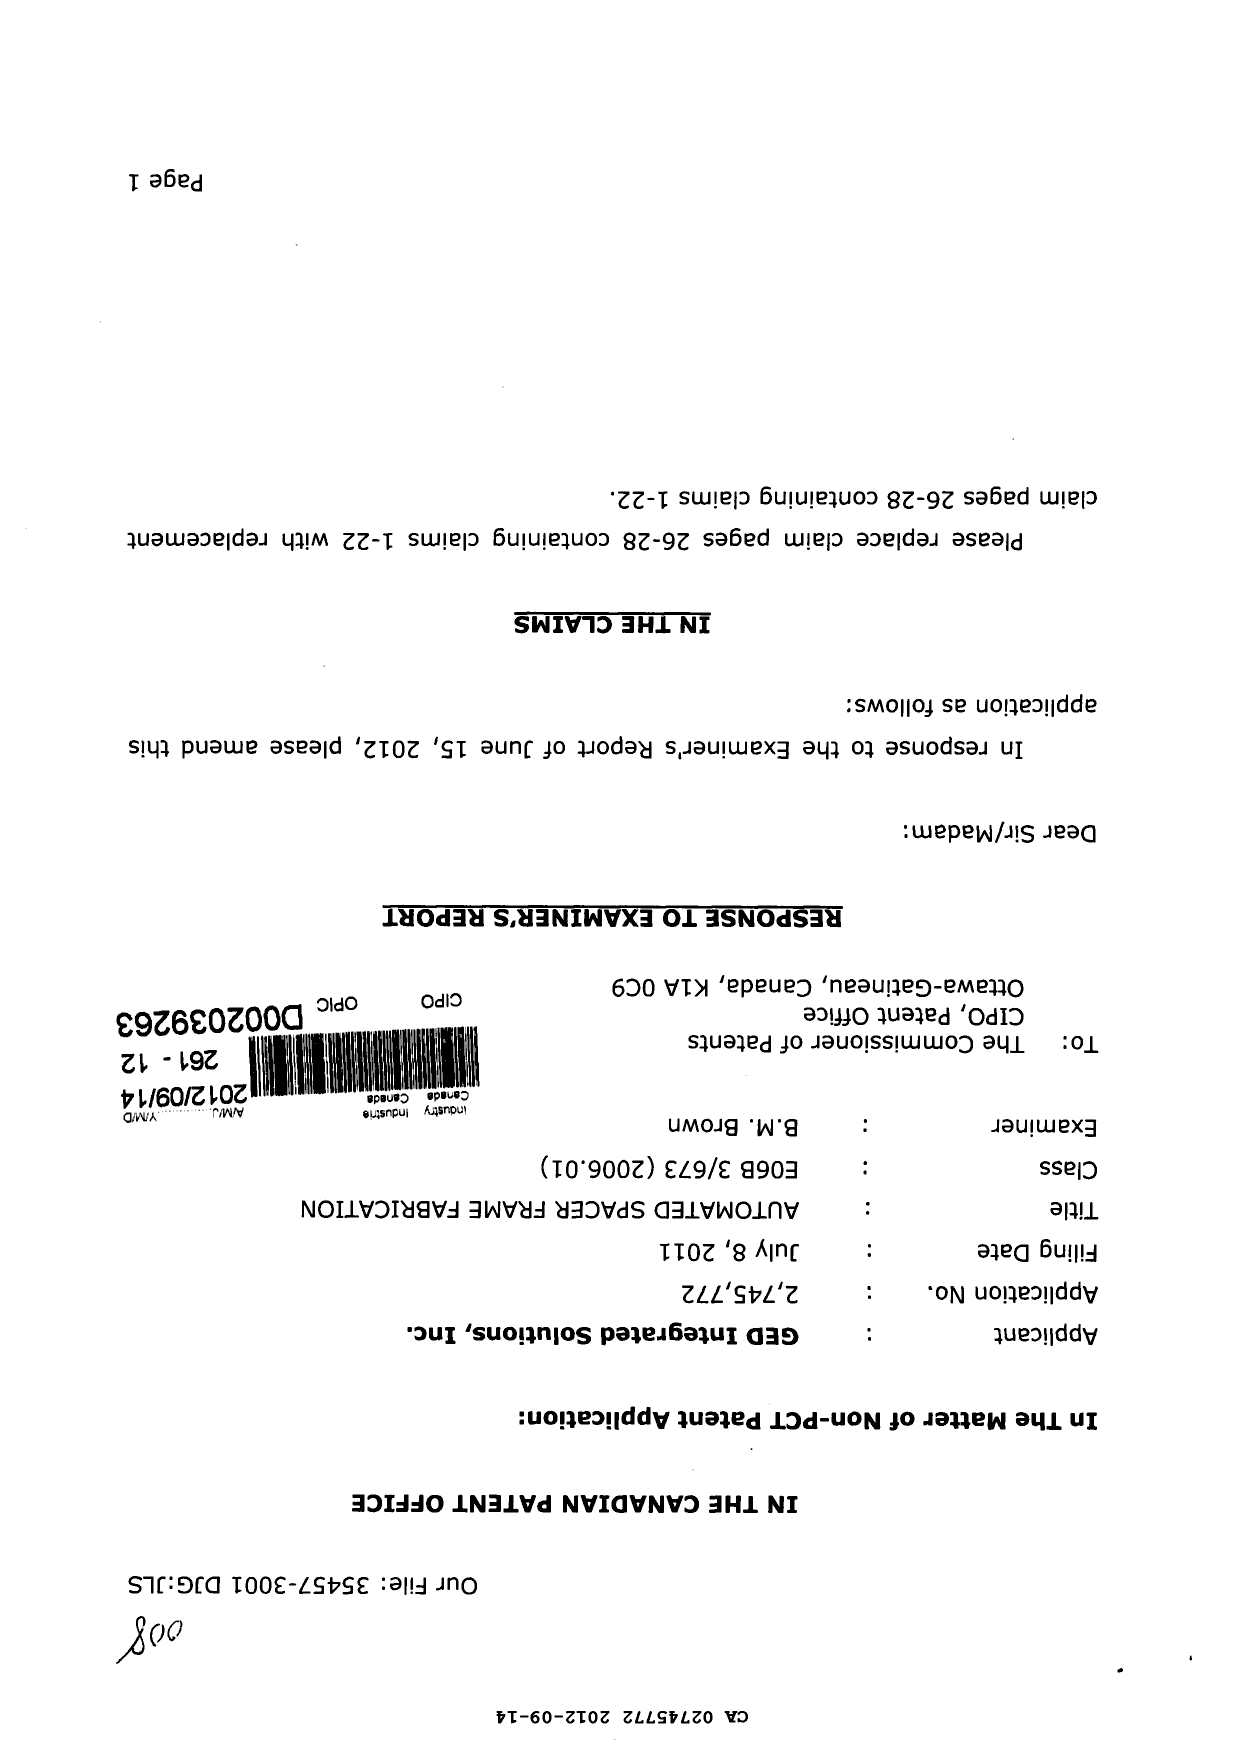 Canadian Patent Document 2745772. Prosecution-Amendment 20111214. Image 1 of 6